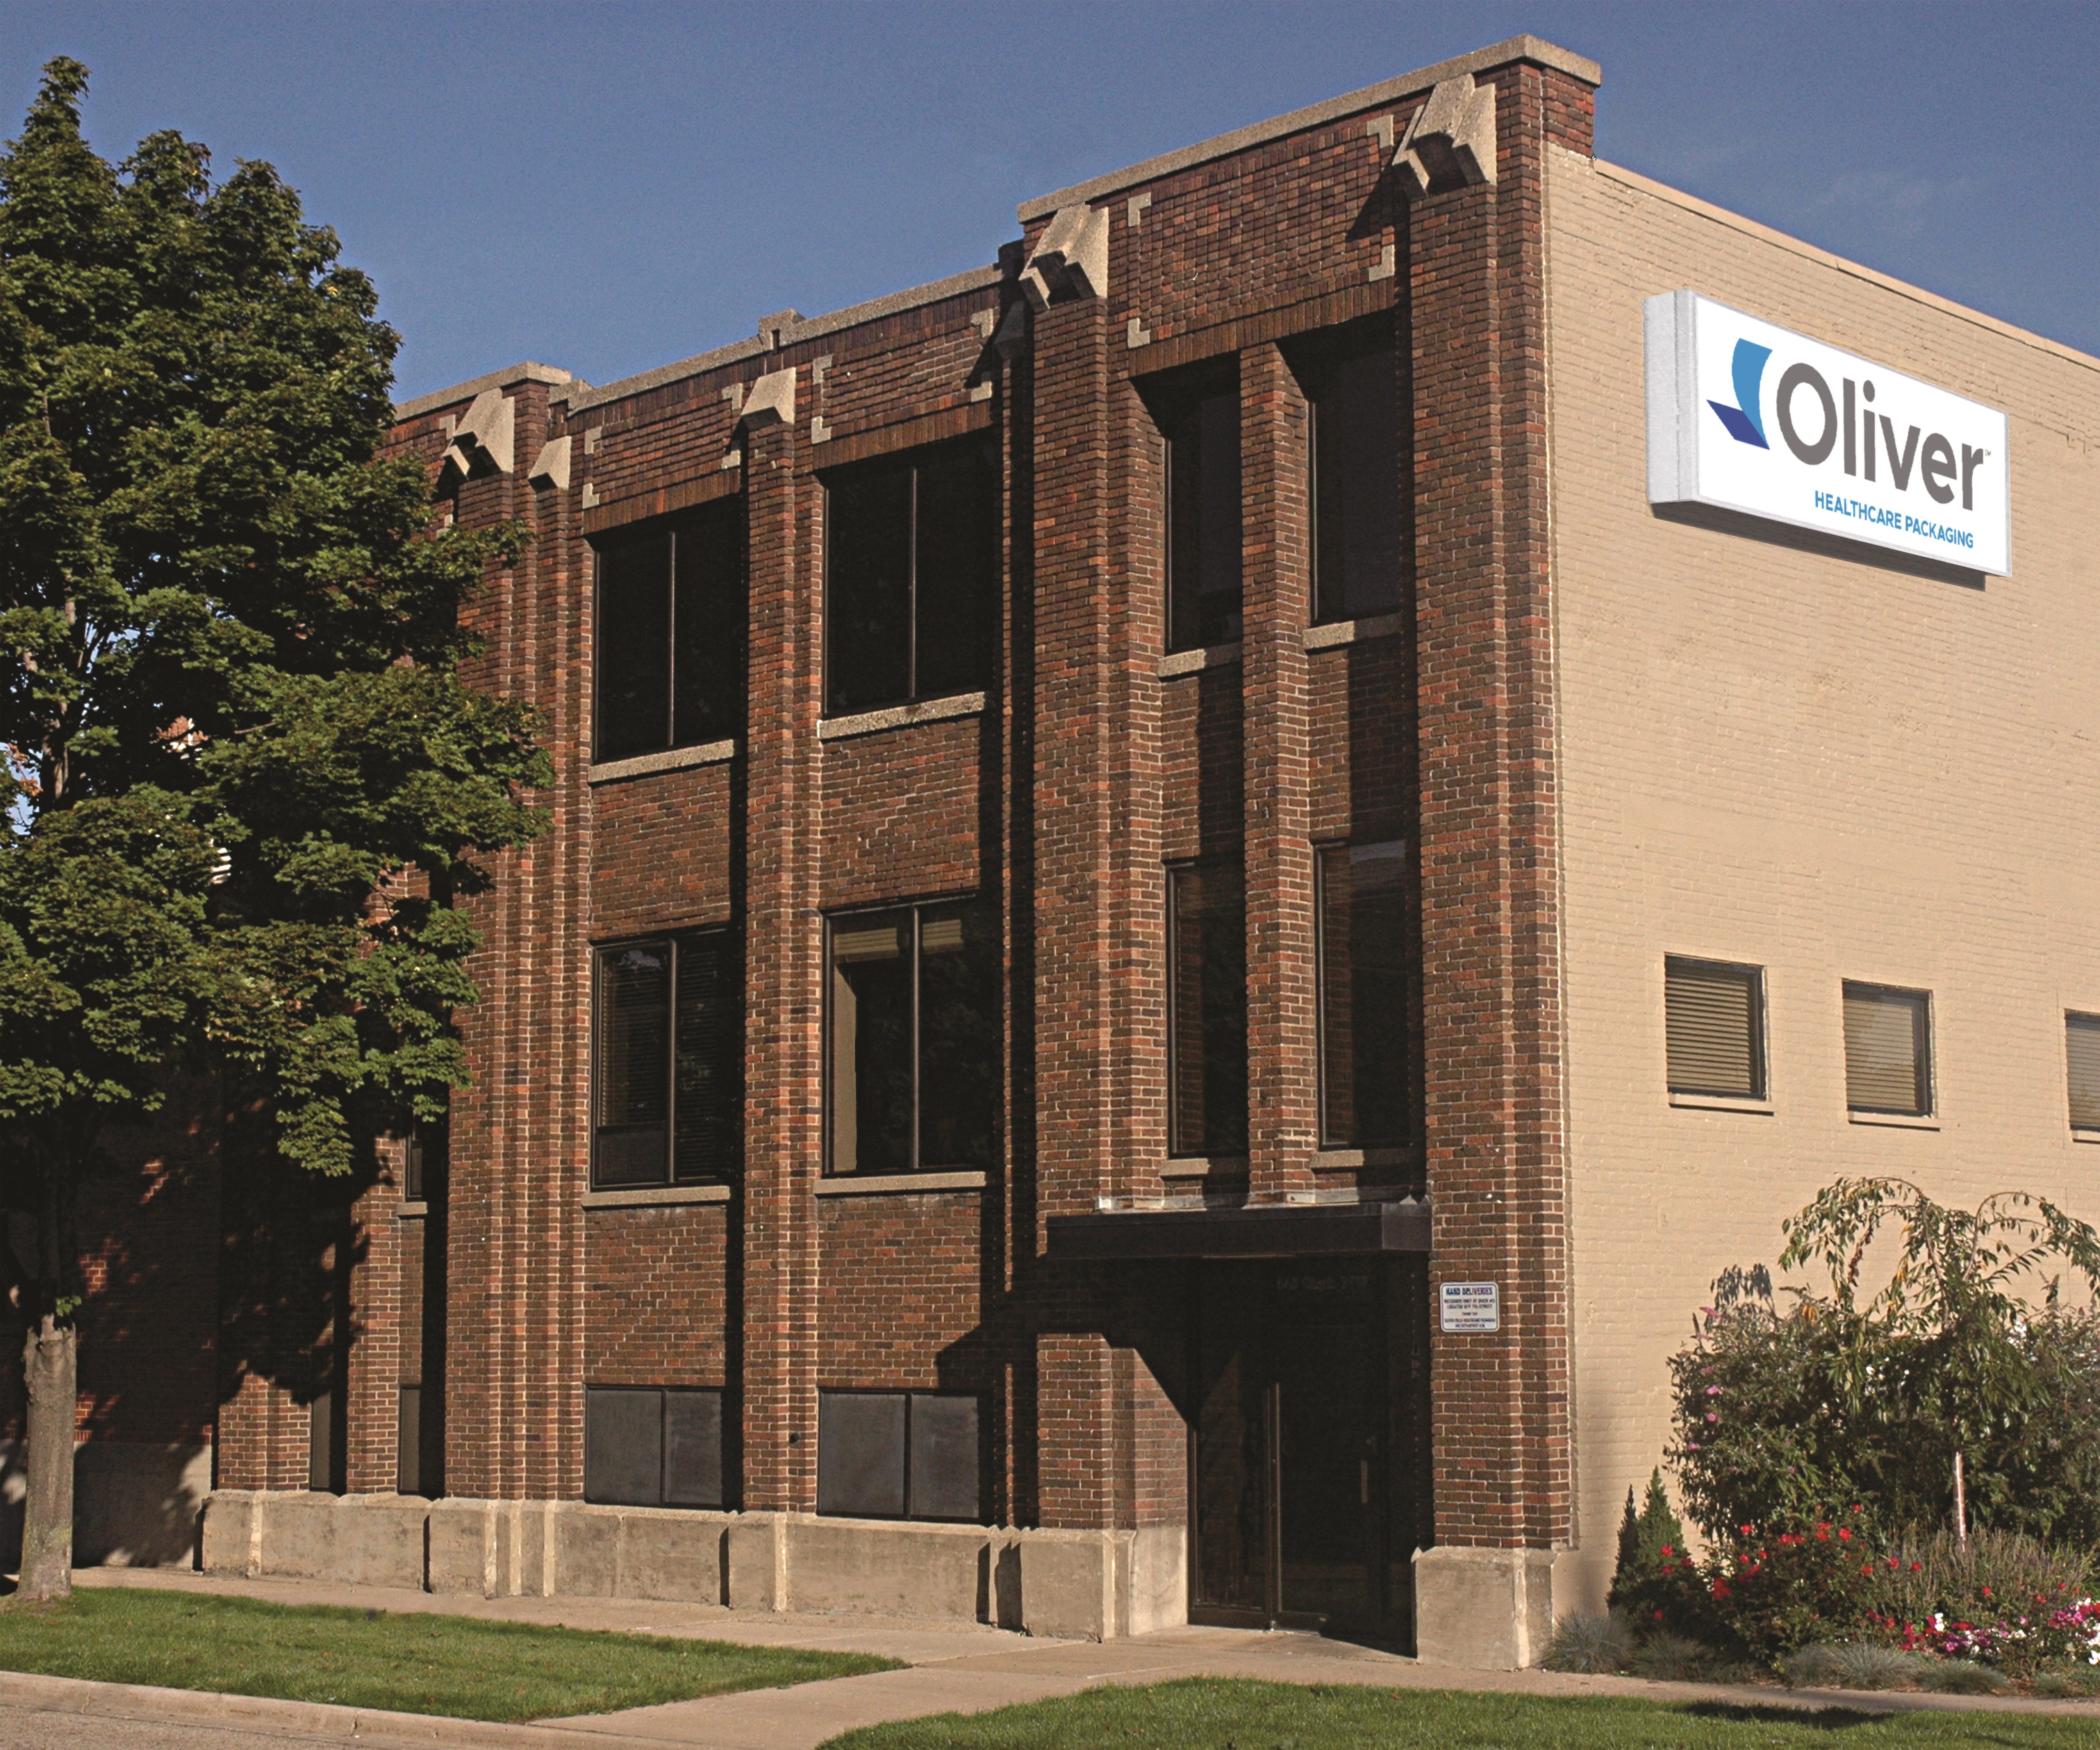 Oliver-Standort in Grand Rapids, Michigan, USA